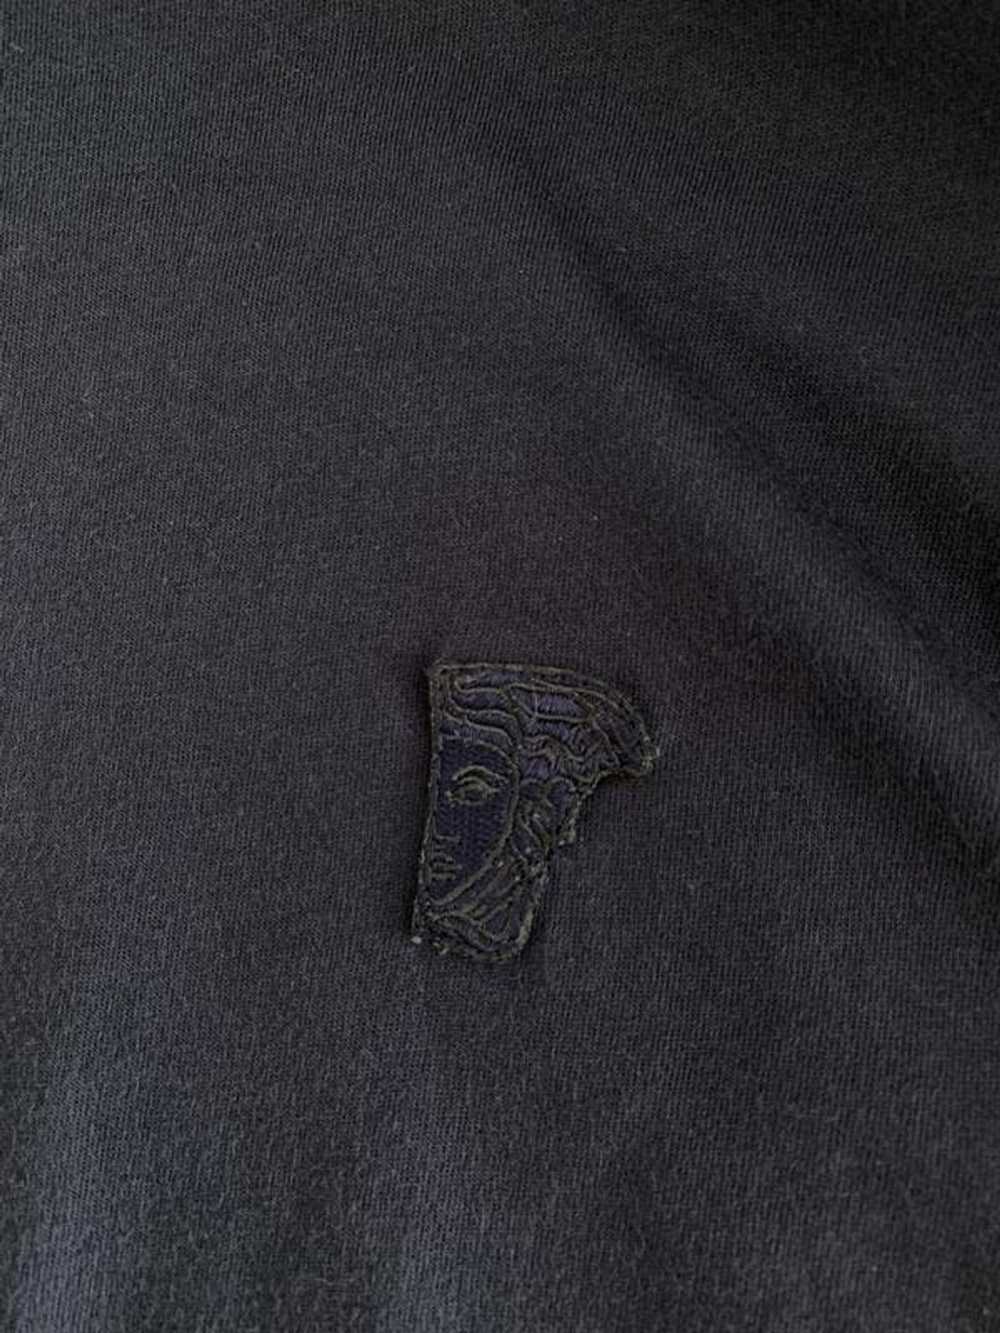 Versace Versace longsleeve t shirt - image 2